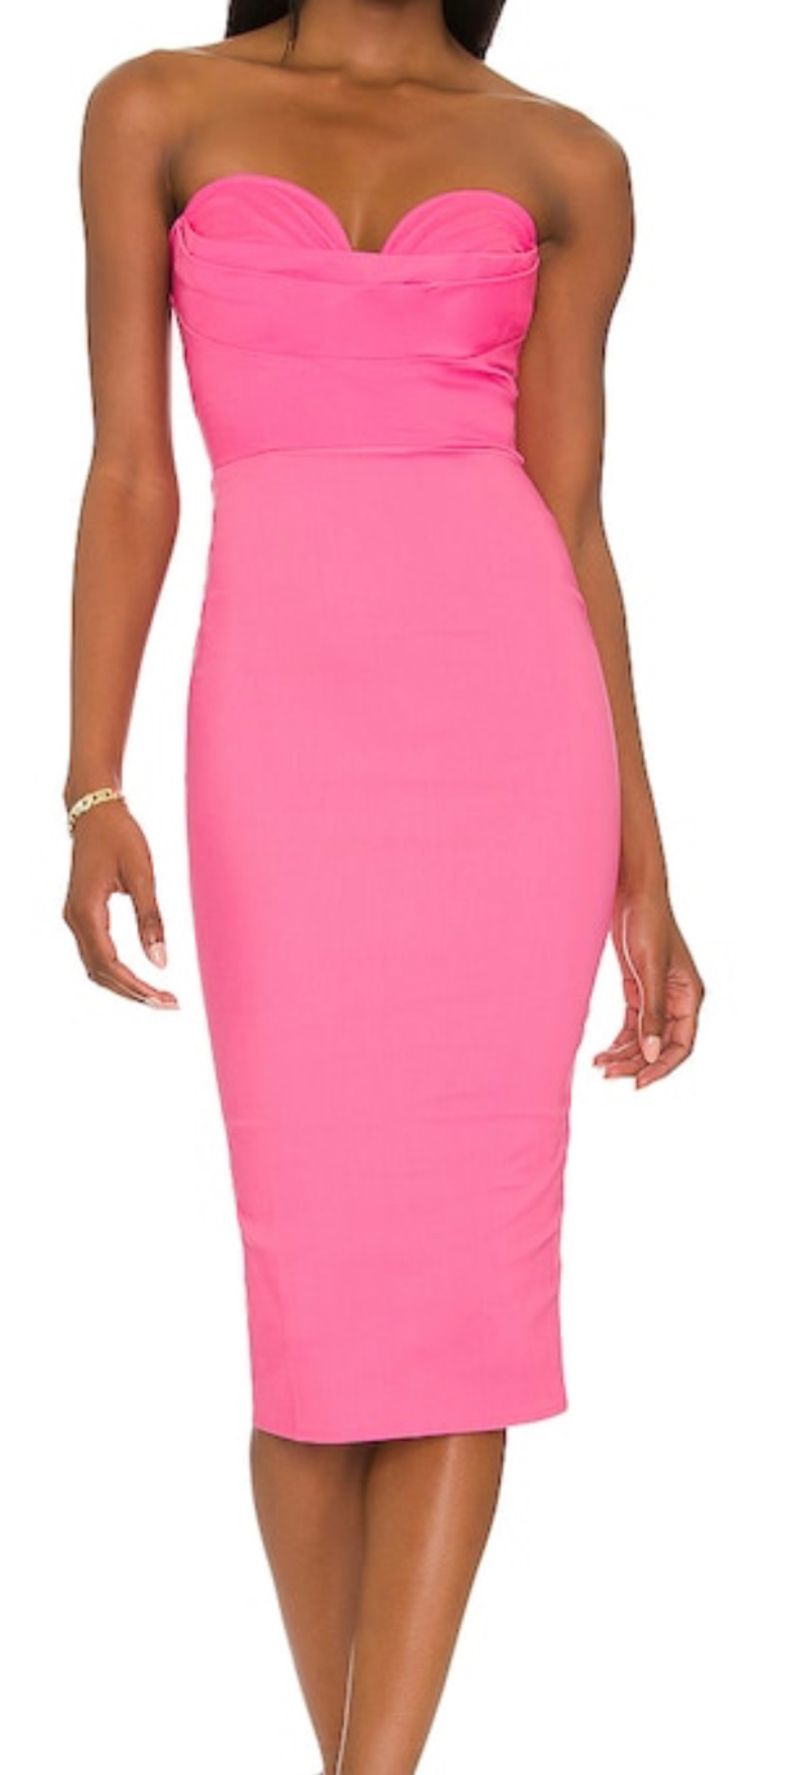 Strapless pink dress 